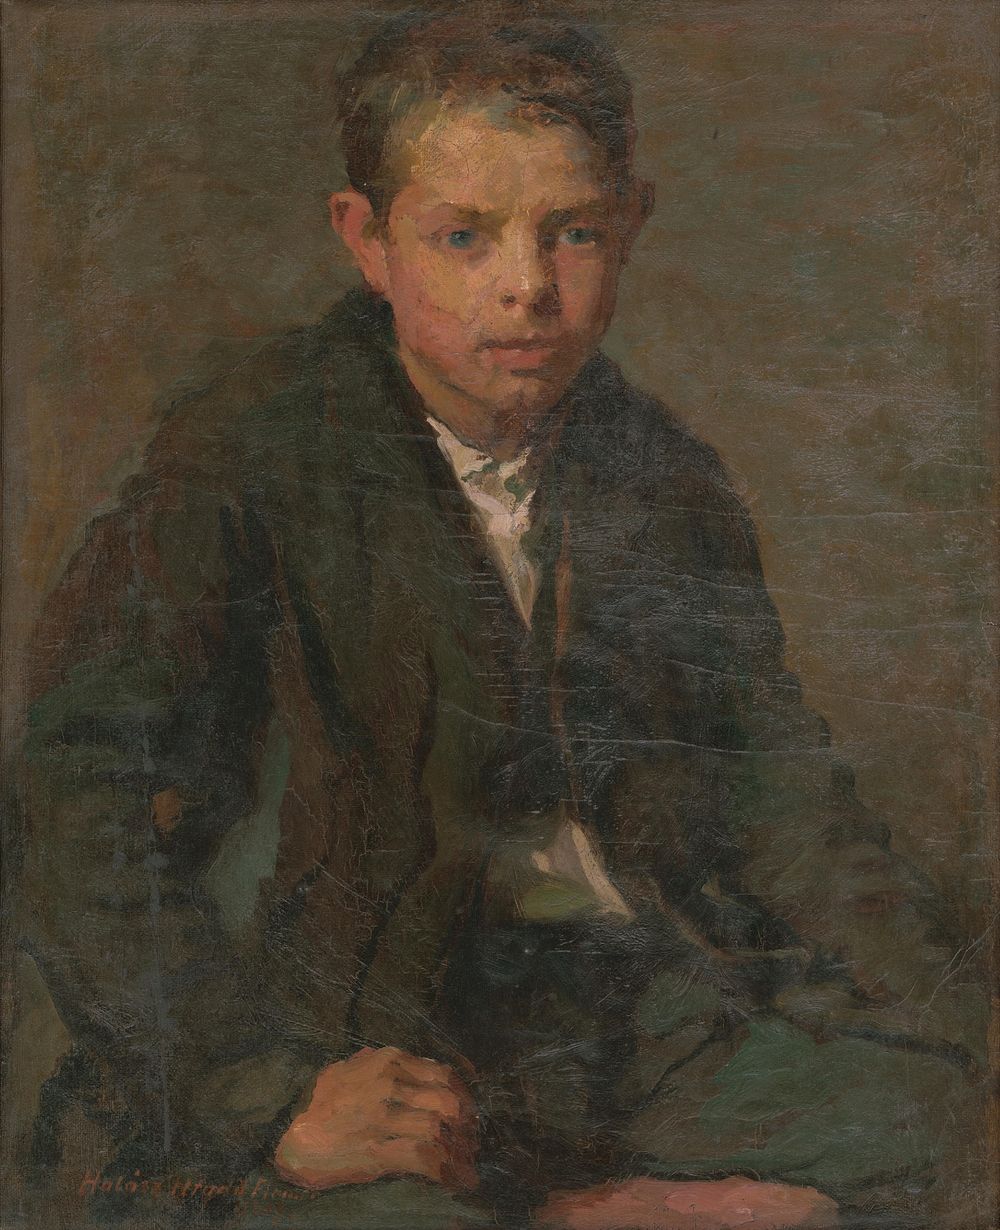 Portrait of laborer boy